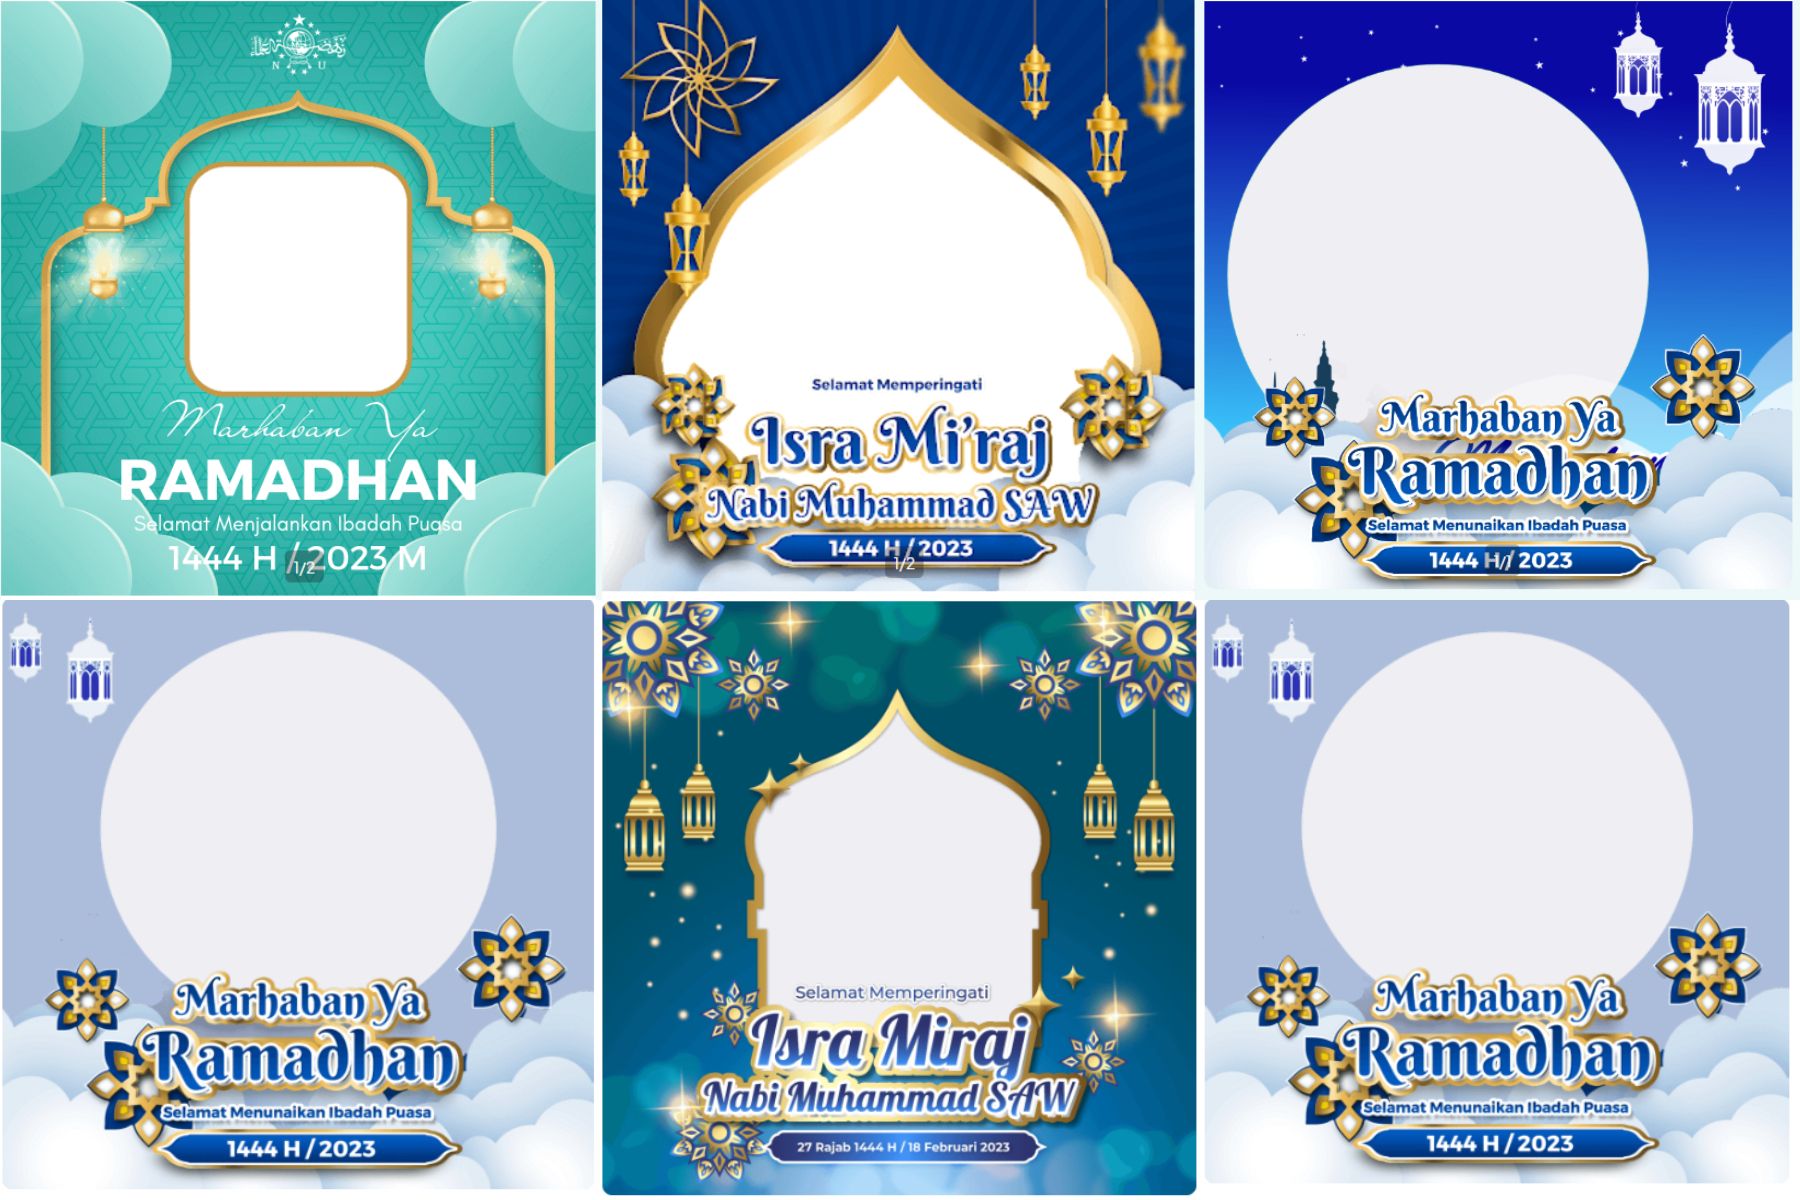 15 Link twibbon Ramadhan 2023 Islami, paling bagus, gratis dari twibbonize buat status WA, FB, dan IG tulisan Marhaban Ya Ramadhan terbaru.